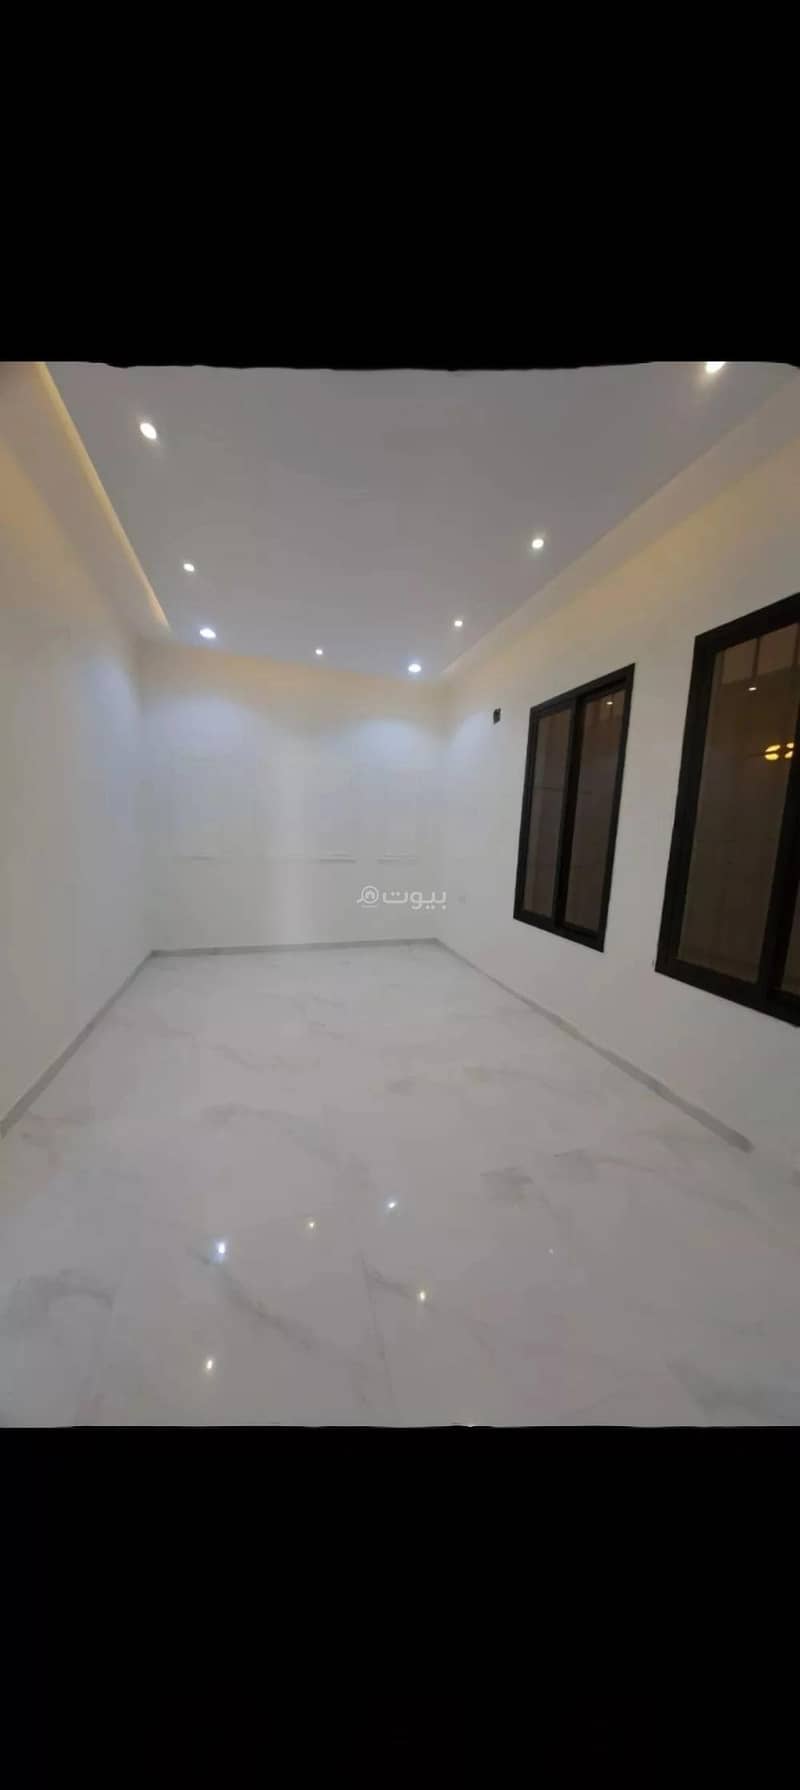 6 Bedrooms Villa for Sale on Omar Ibn Aws Al Thaqafi Street, Riyadh